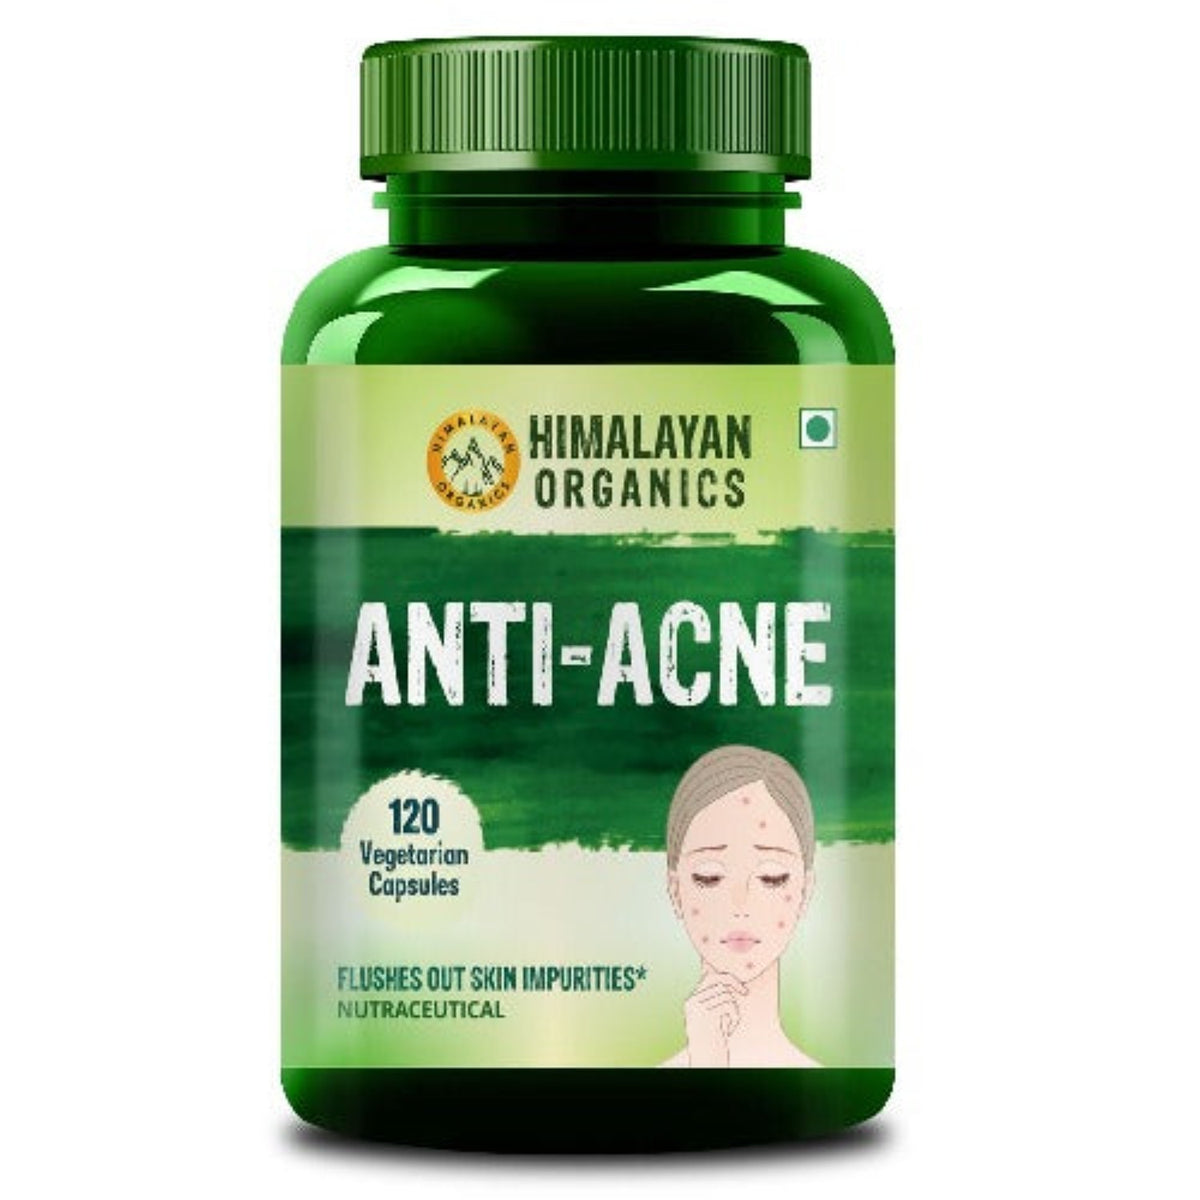 Himalayan Organics Anti-Akne-Ergänzung für klare, strahlende Haut, reich an Antioxidantien, blutreinigend, Haut-Wellness, 120 Kapseln